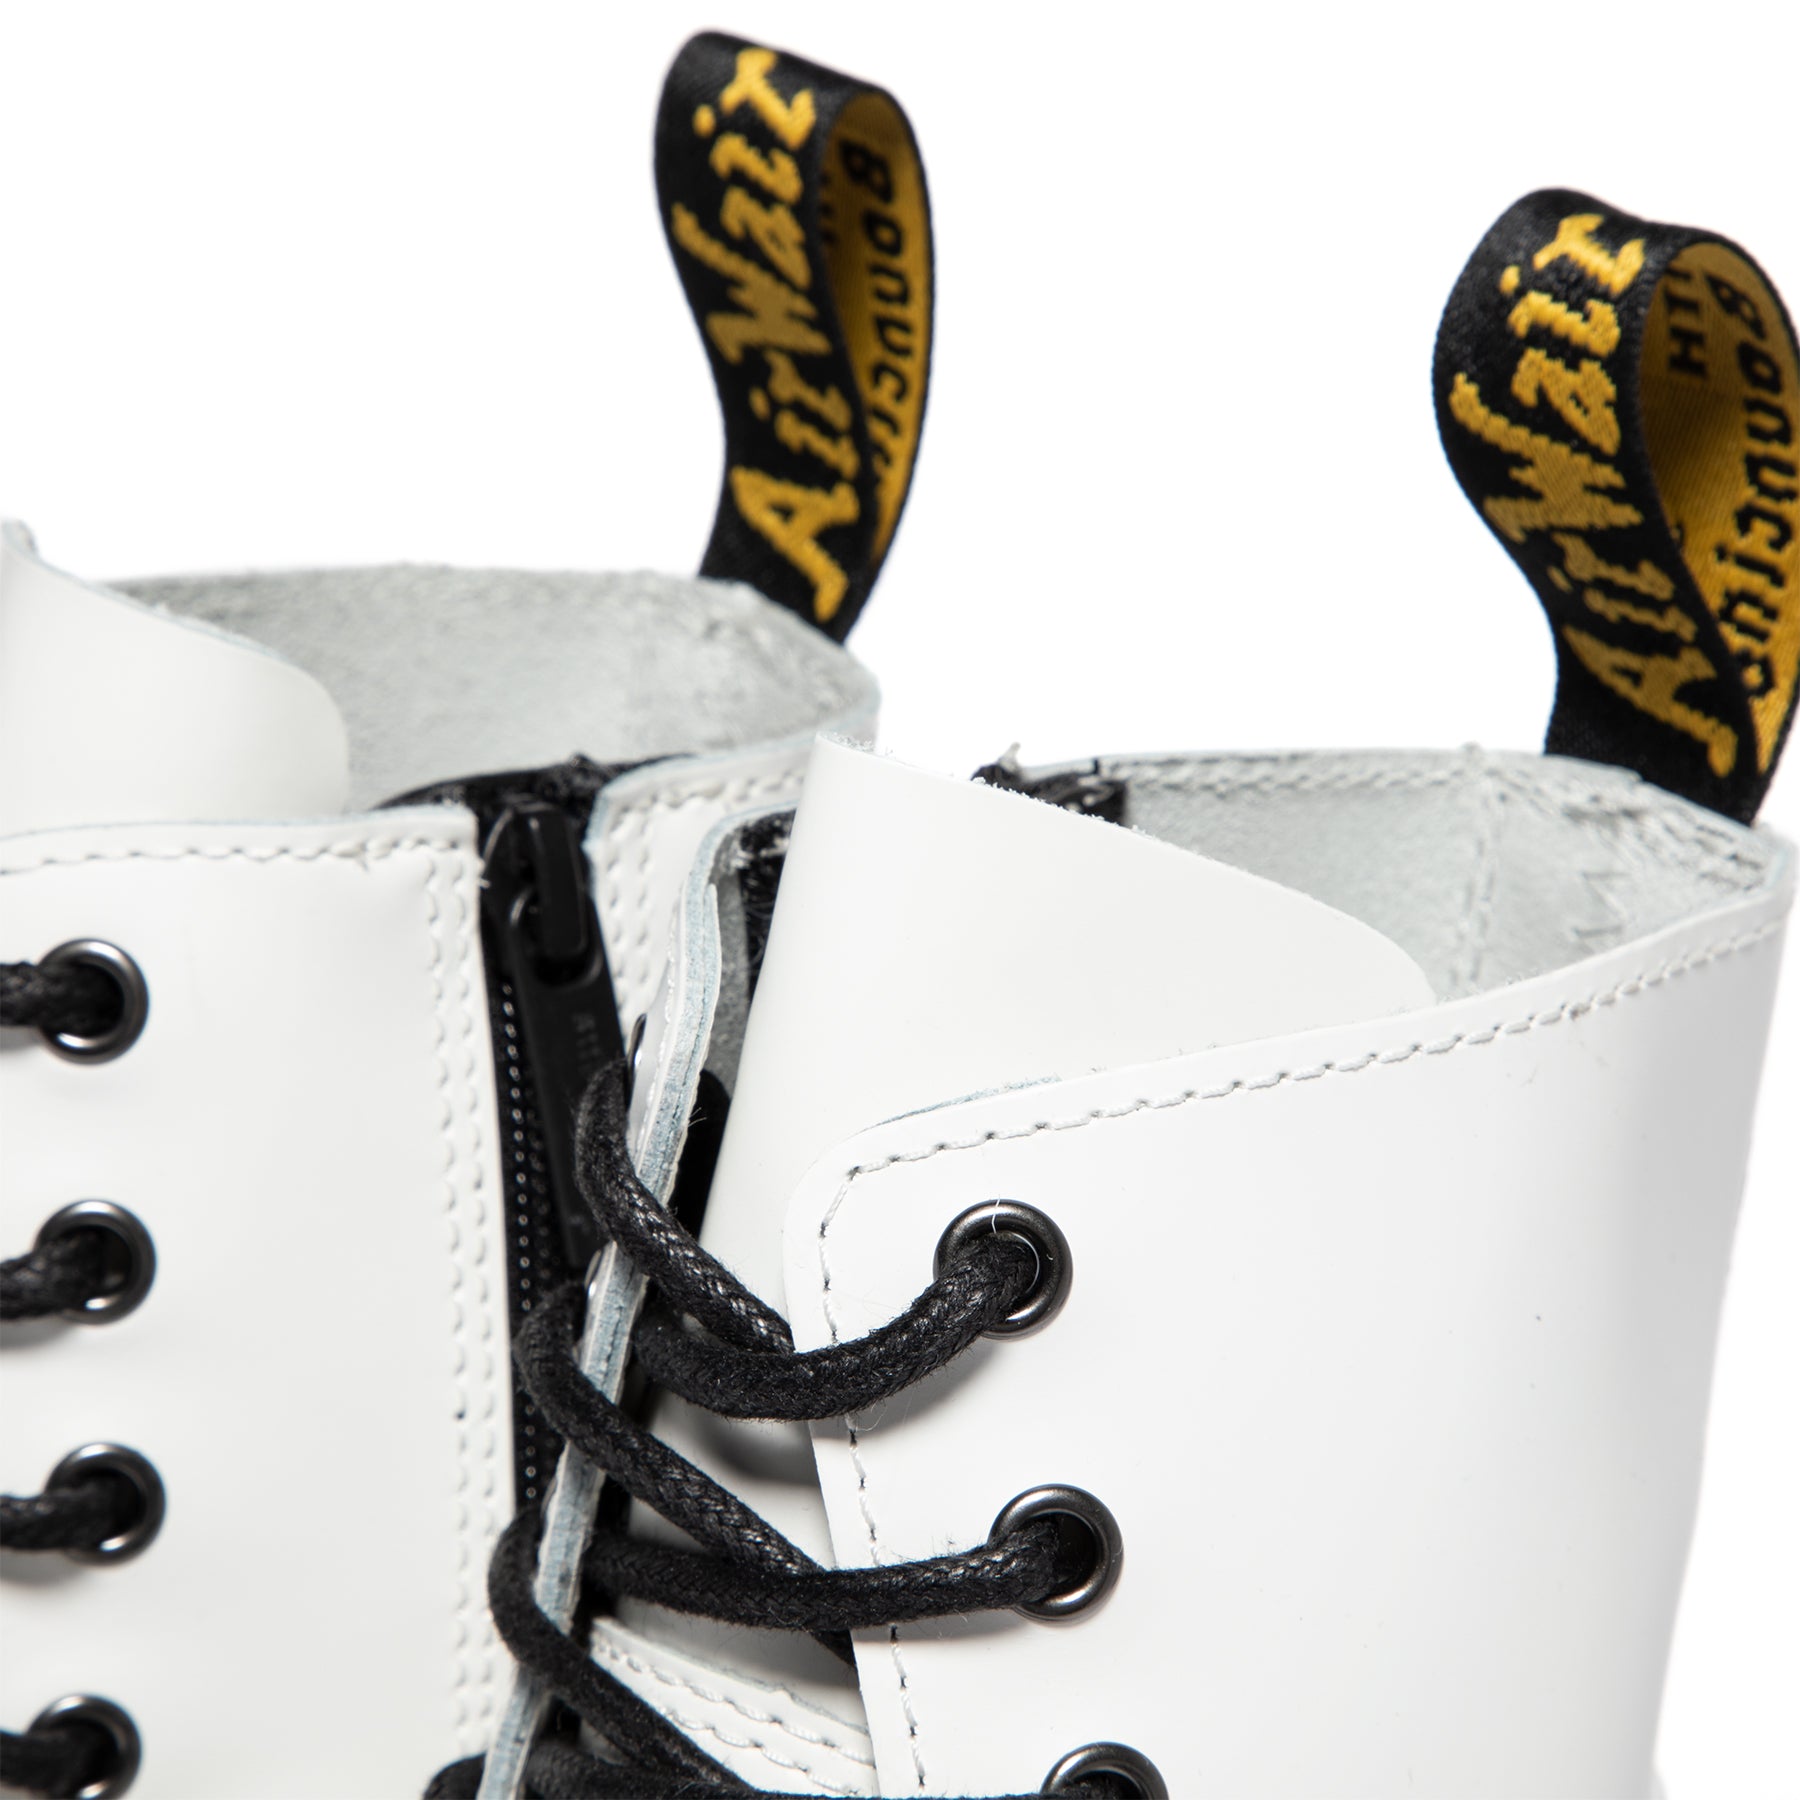 Jadon Boot Smooth Leather Platforms in White